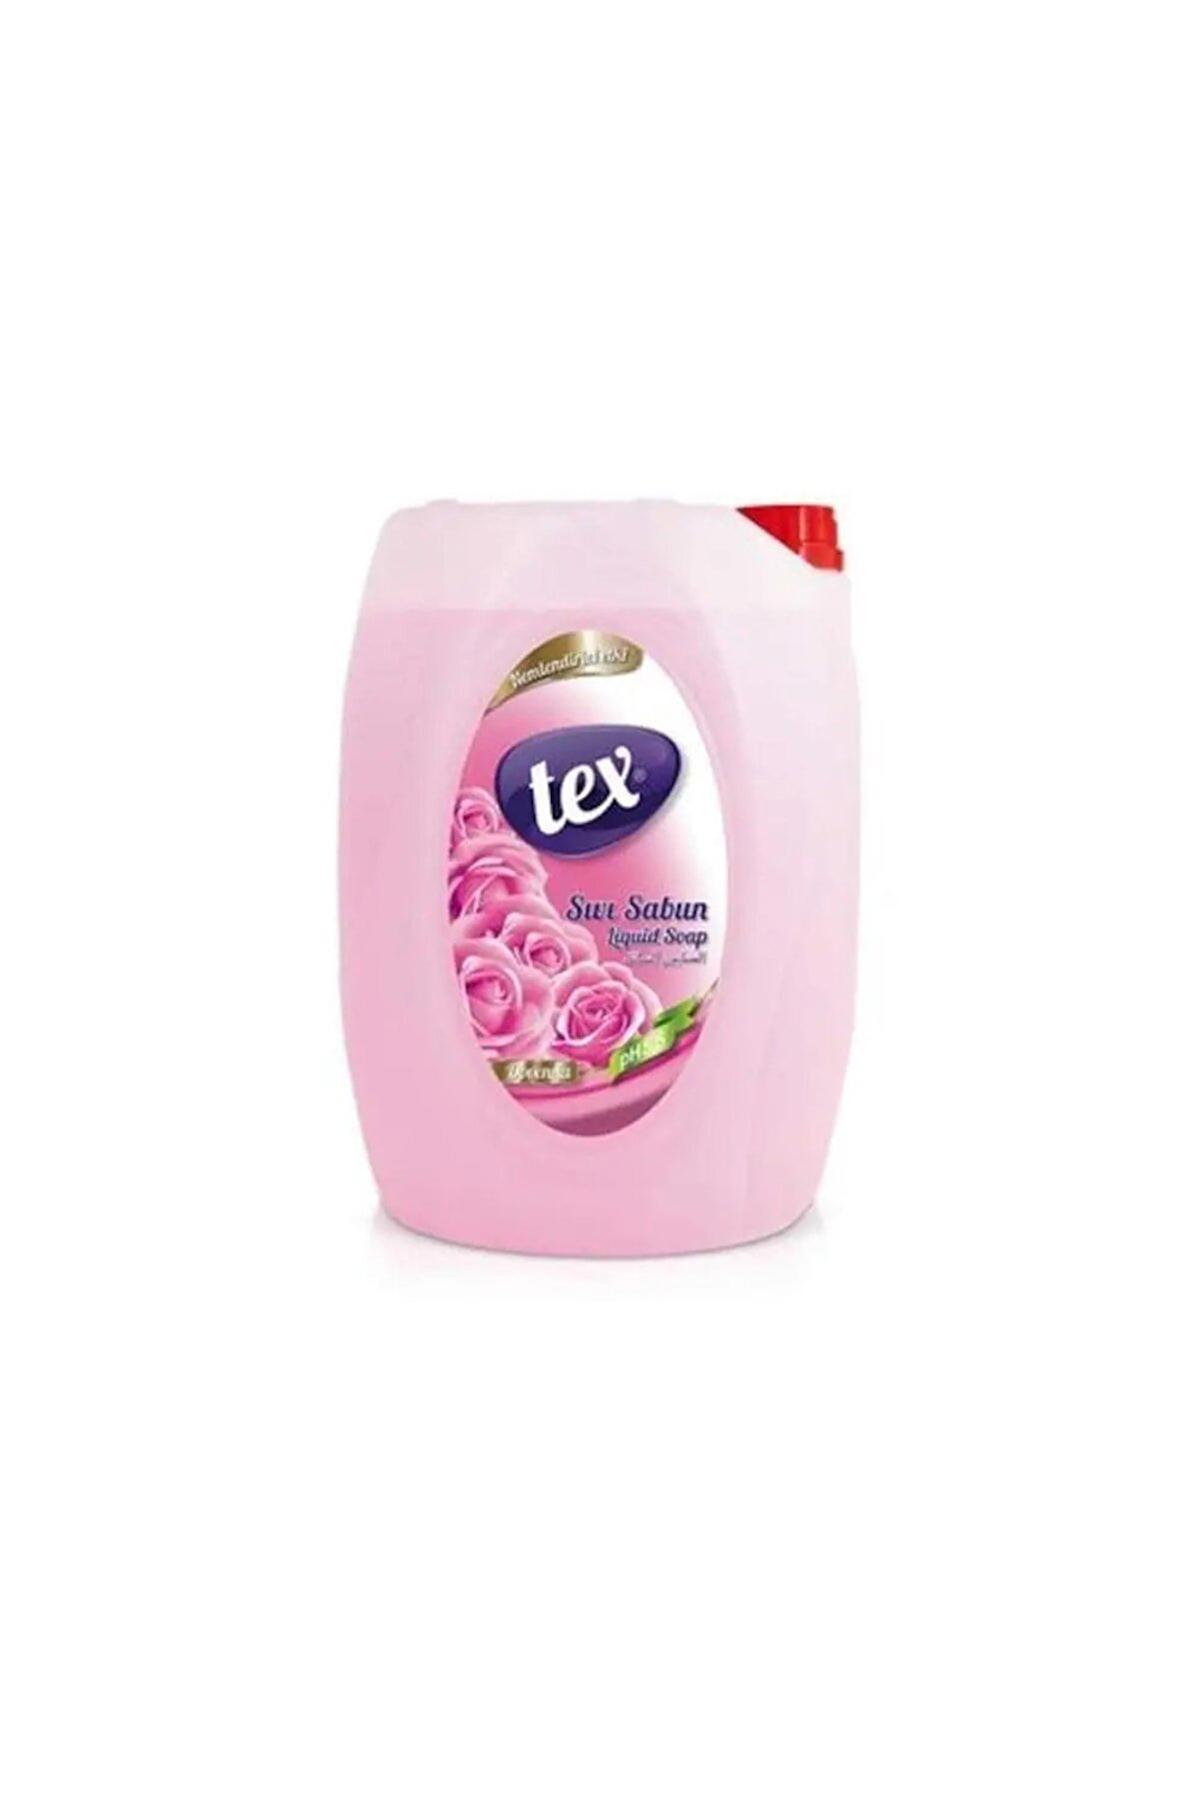 Tex Nemlendiricili Sıvı Sabun 5 kg Tekli